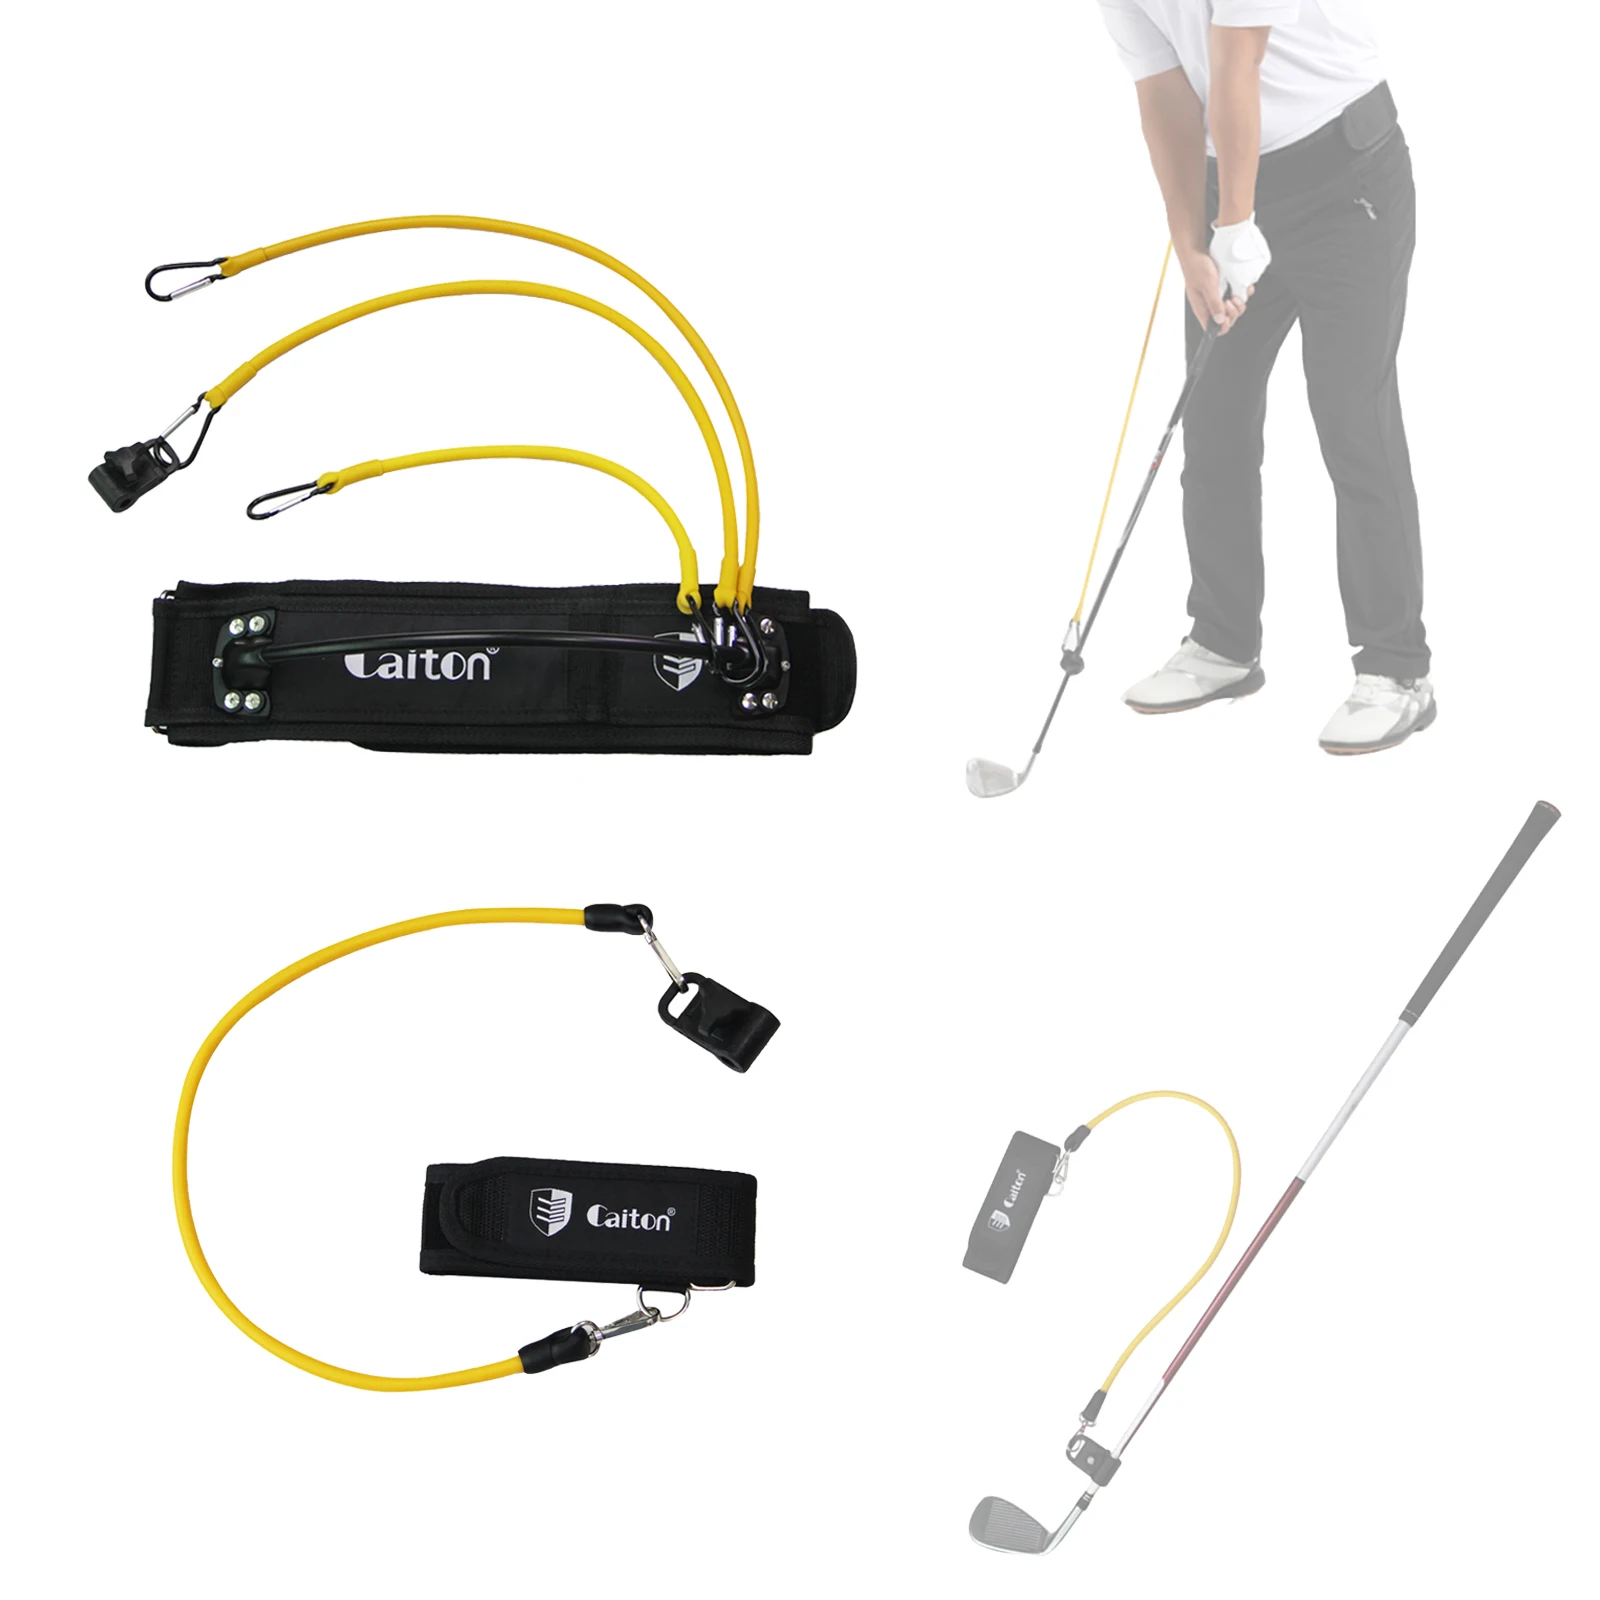 Golf Training Aids - Correct Golf Swing, Posture Corrector Golf Swing Training Band, Posture Correcting Practicing